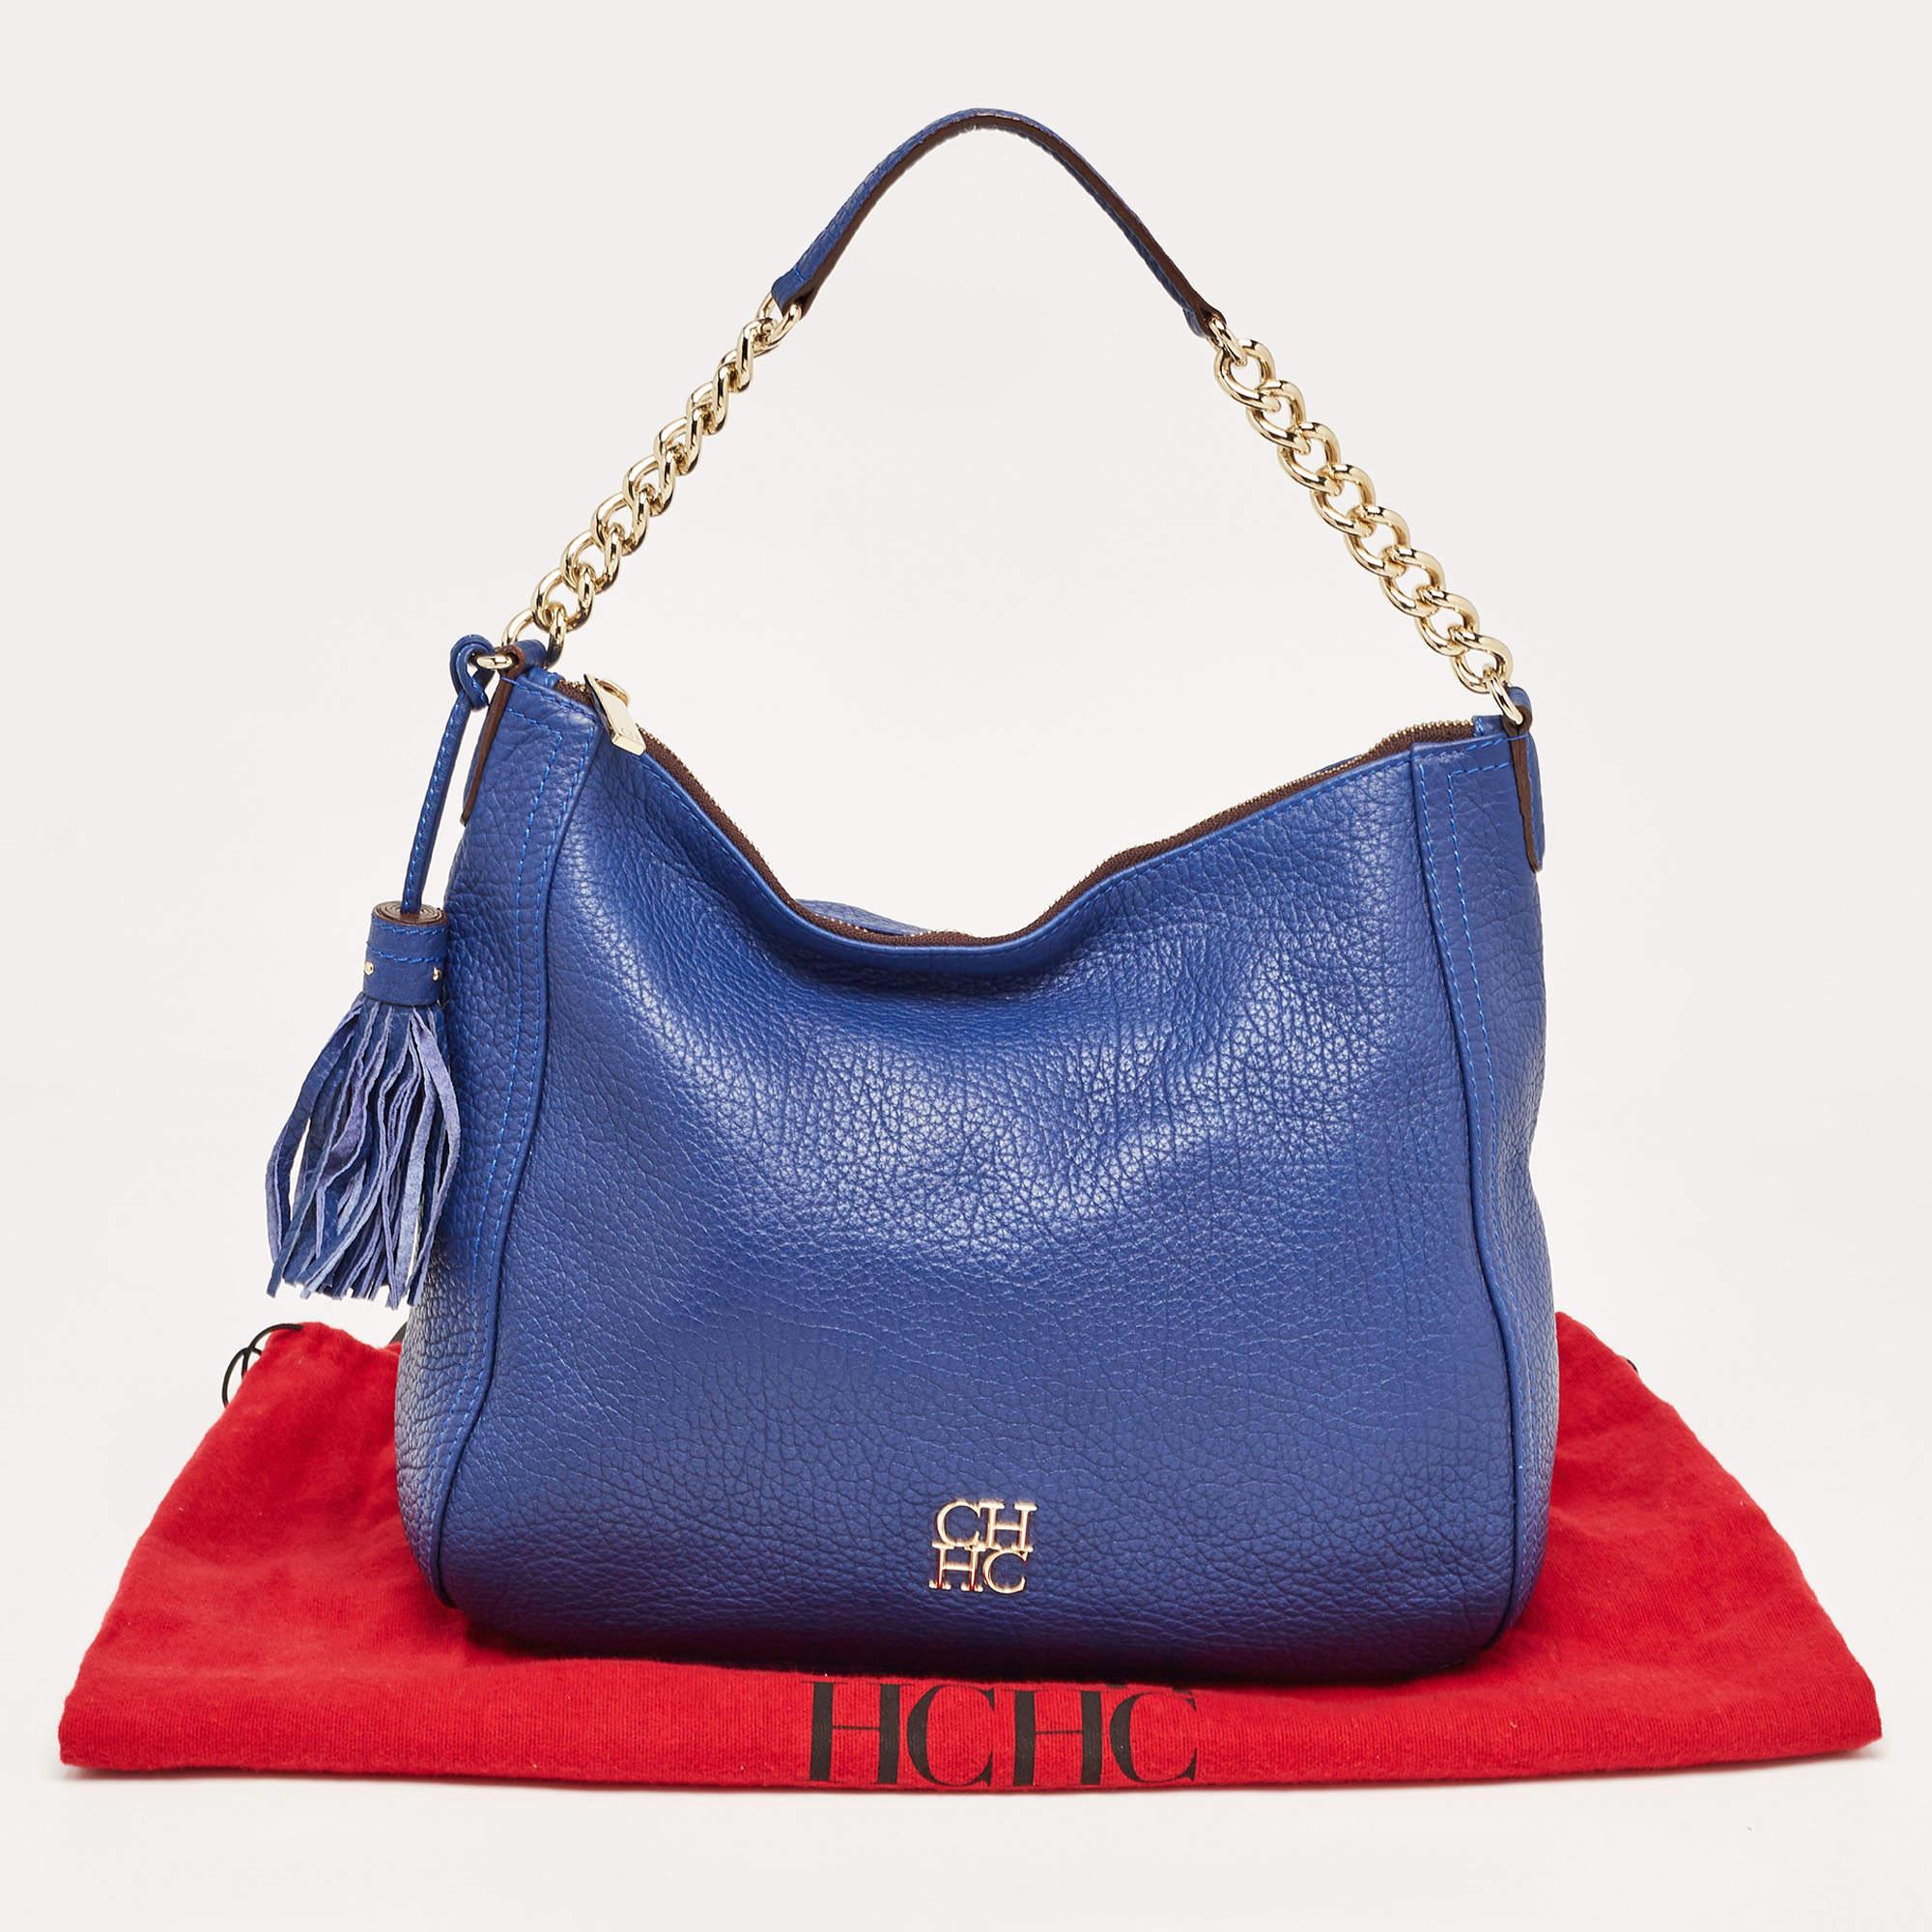 Carolina Herrera Blue Leather Chain Tassel Hobo For Sale 6